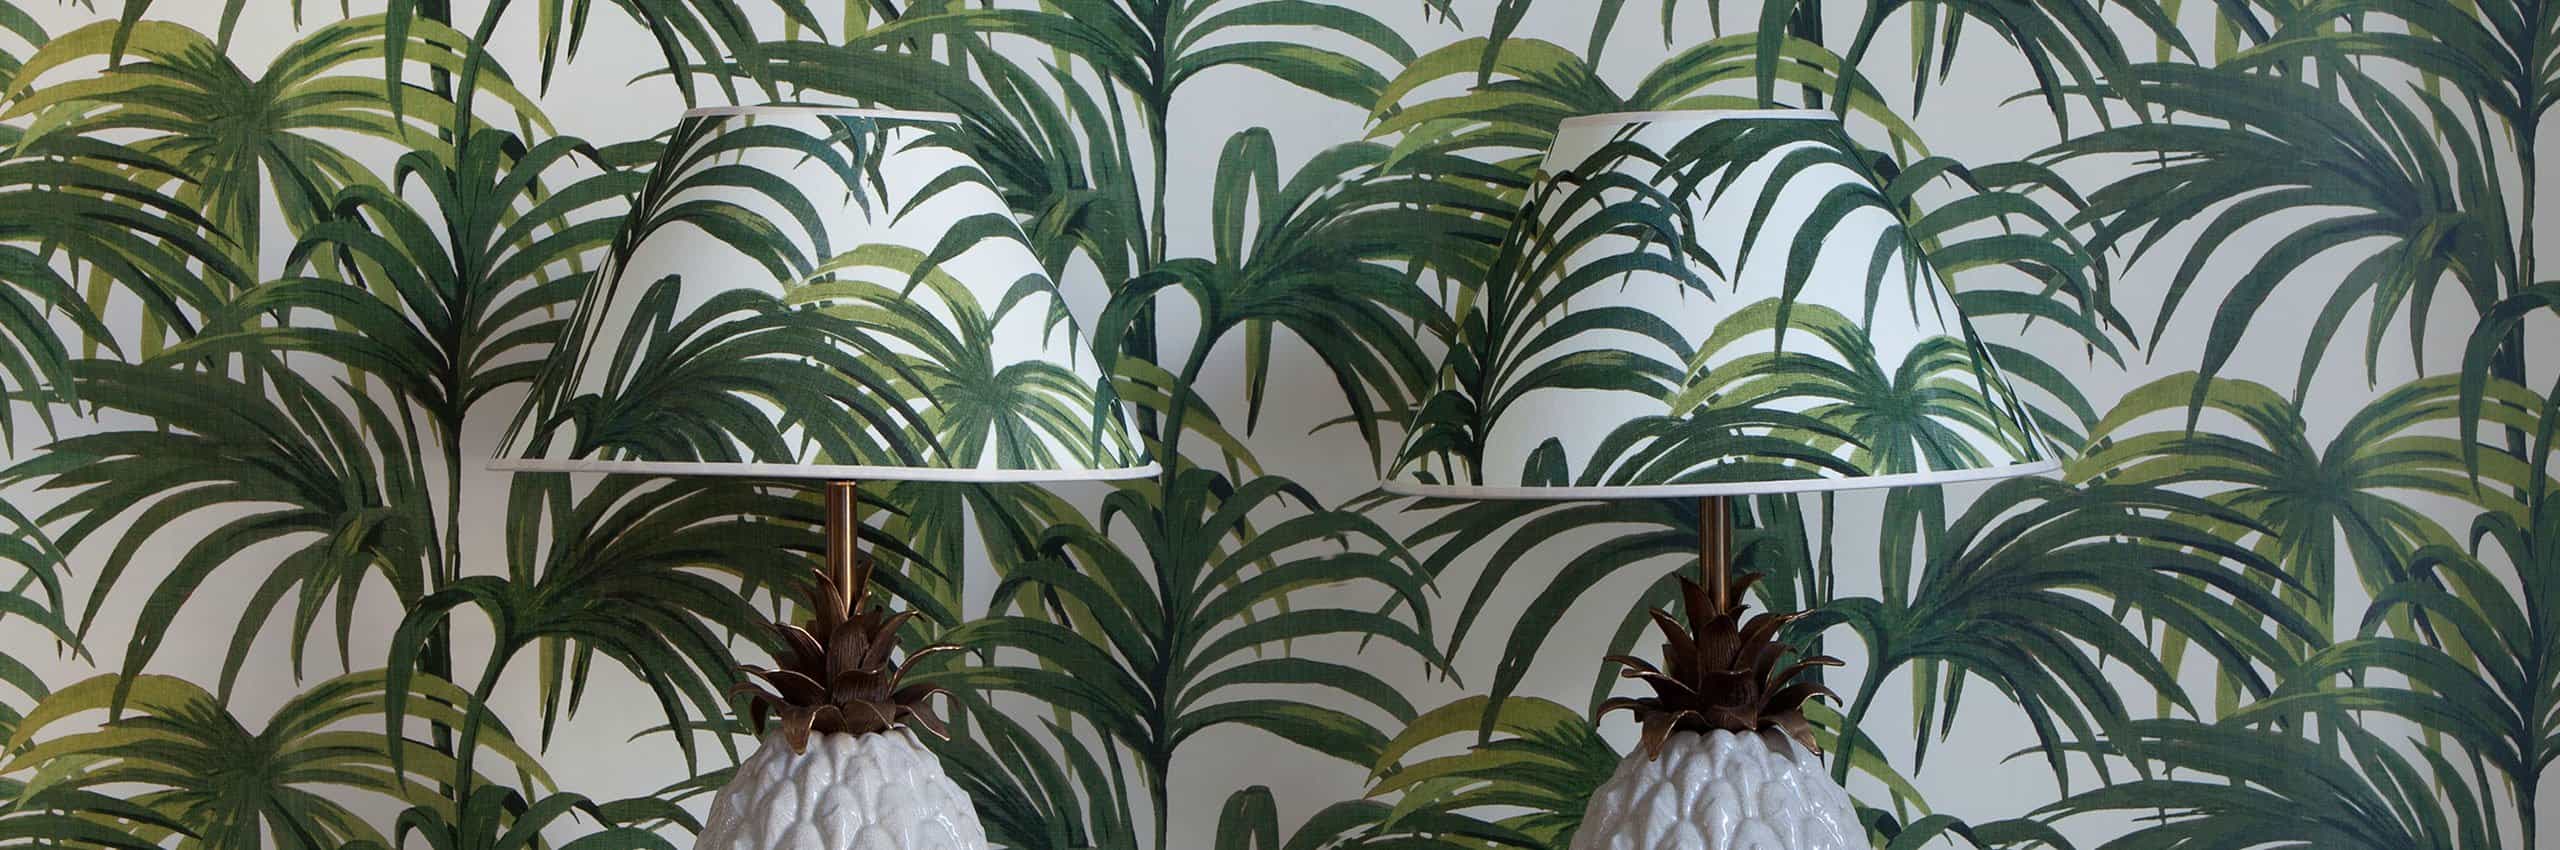 dschungel wallpaper uk,pflanze,zimmerpflanze,blume,blühende pflanze,palme